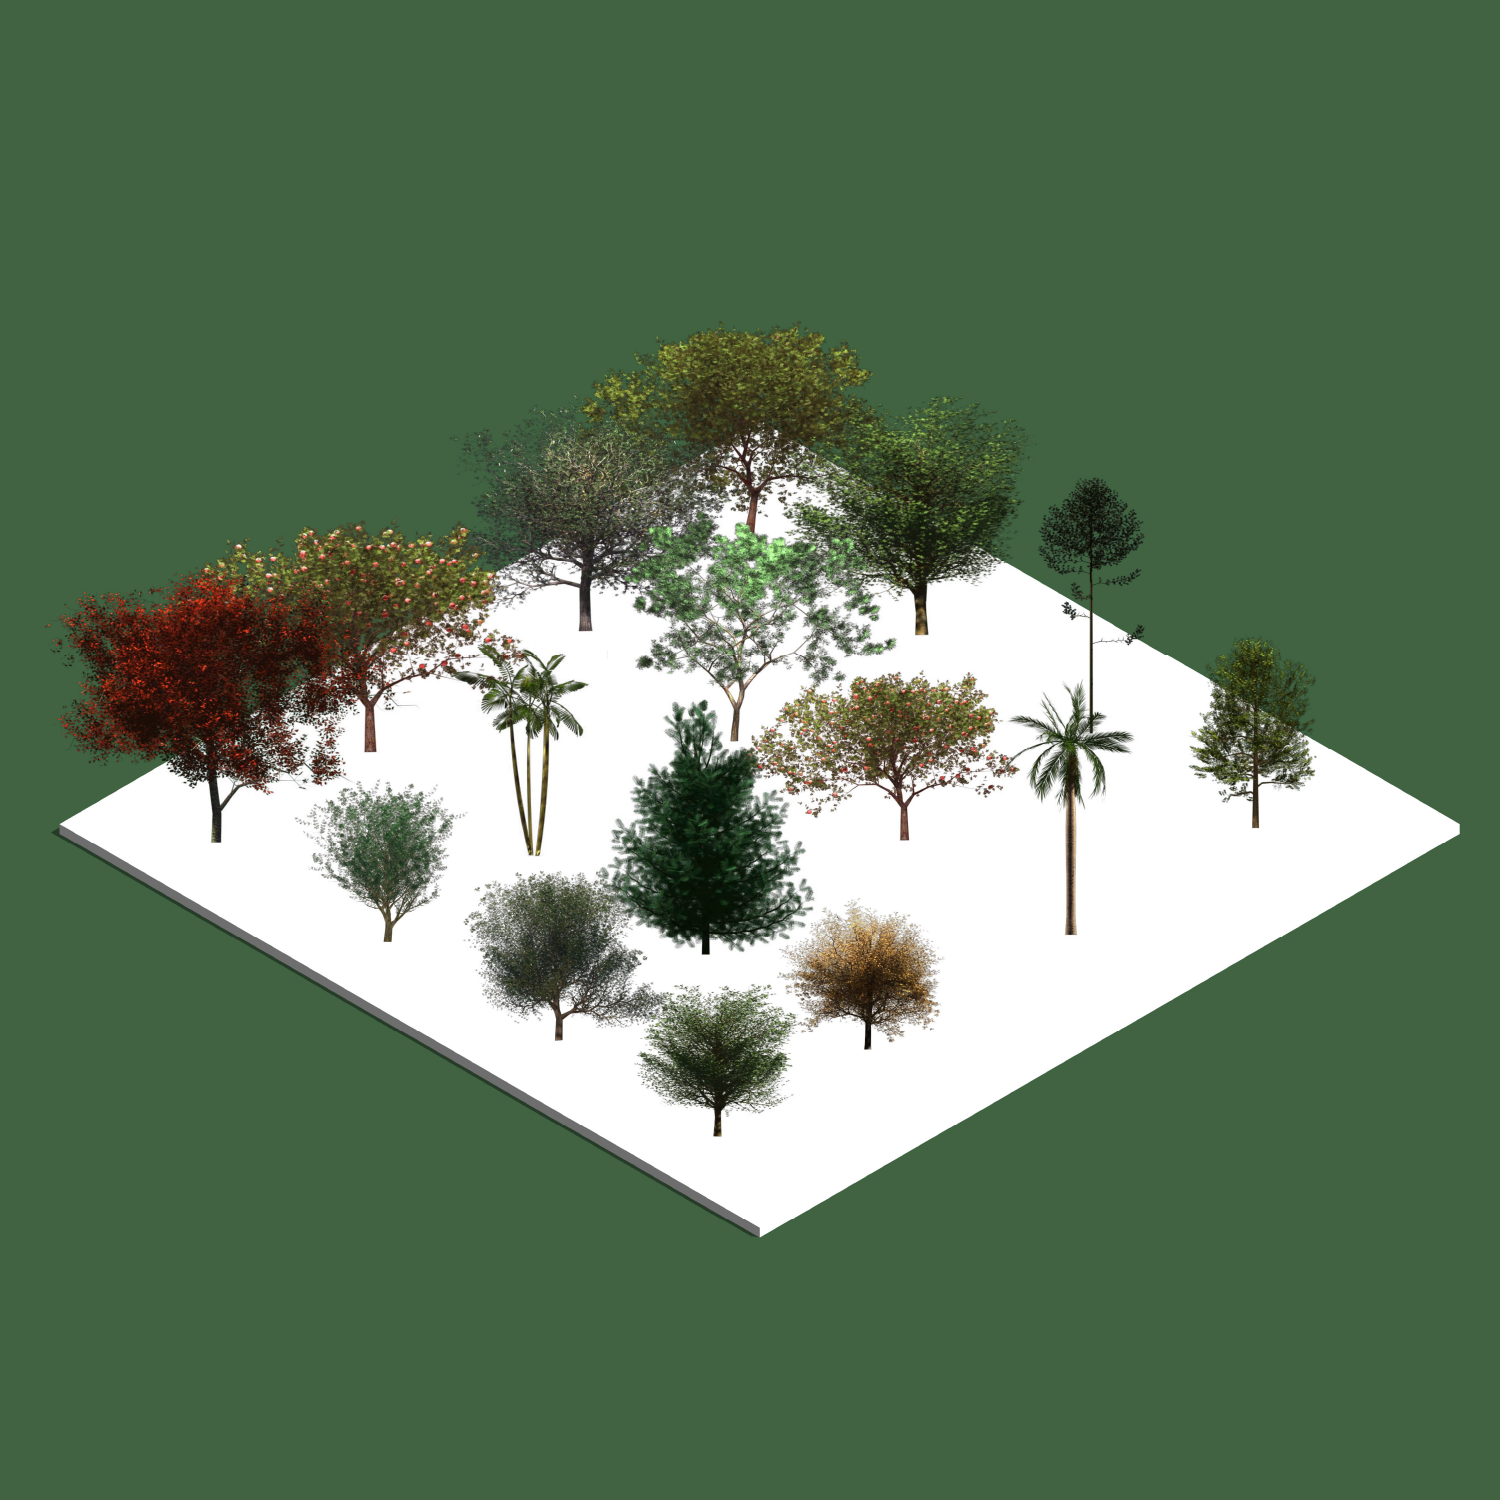 tree revit model download free